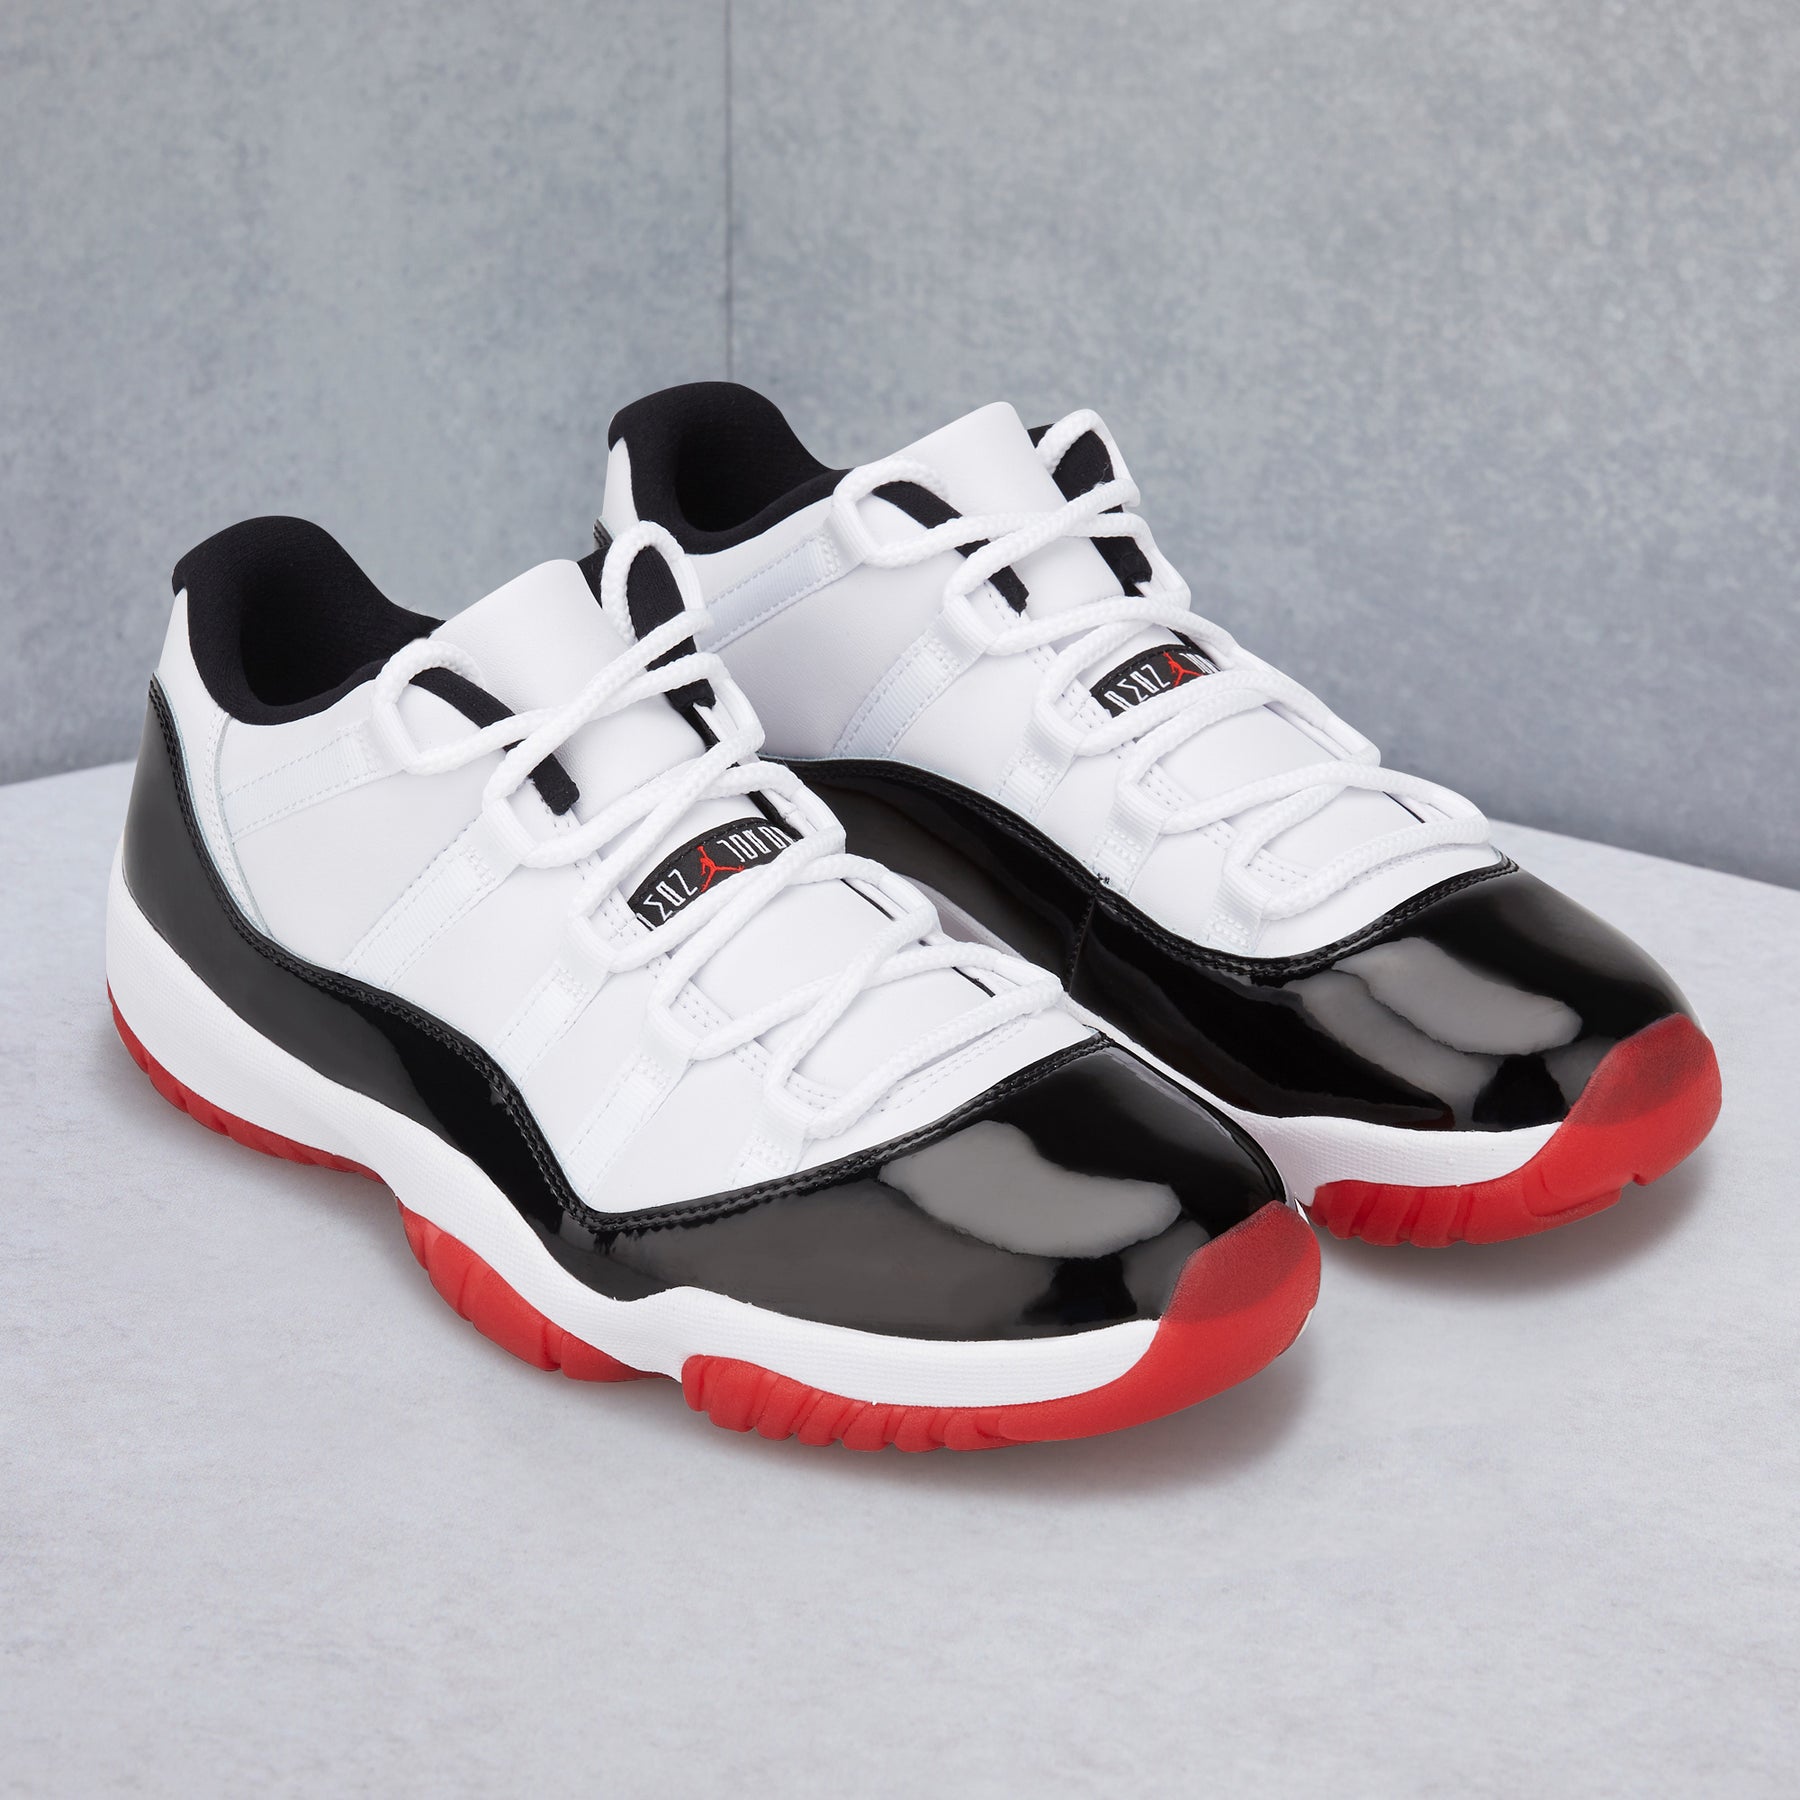 Jordan Air Jordan 11 Retro Low Shoe | Dropkick